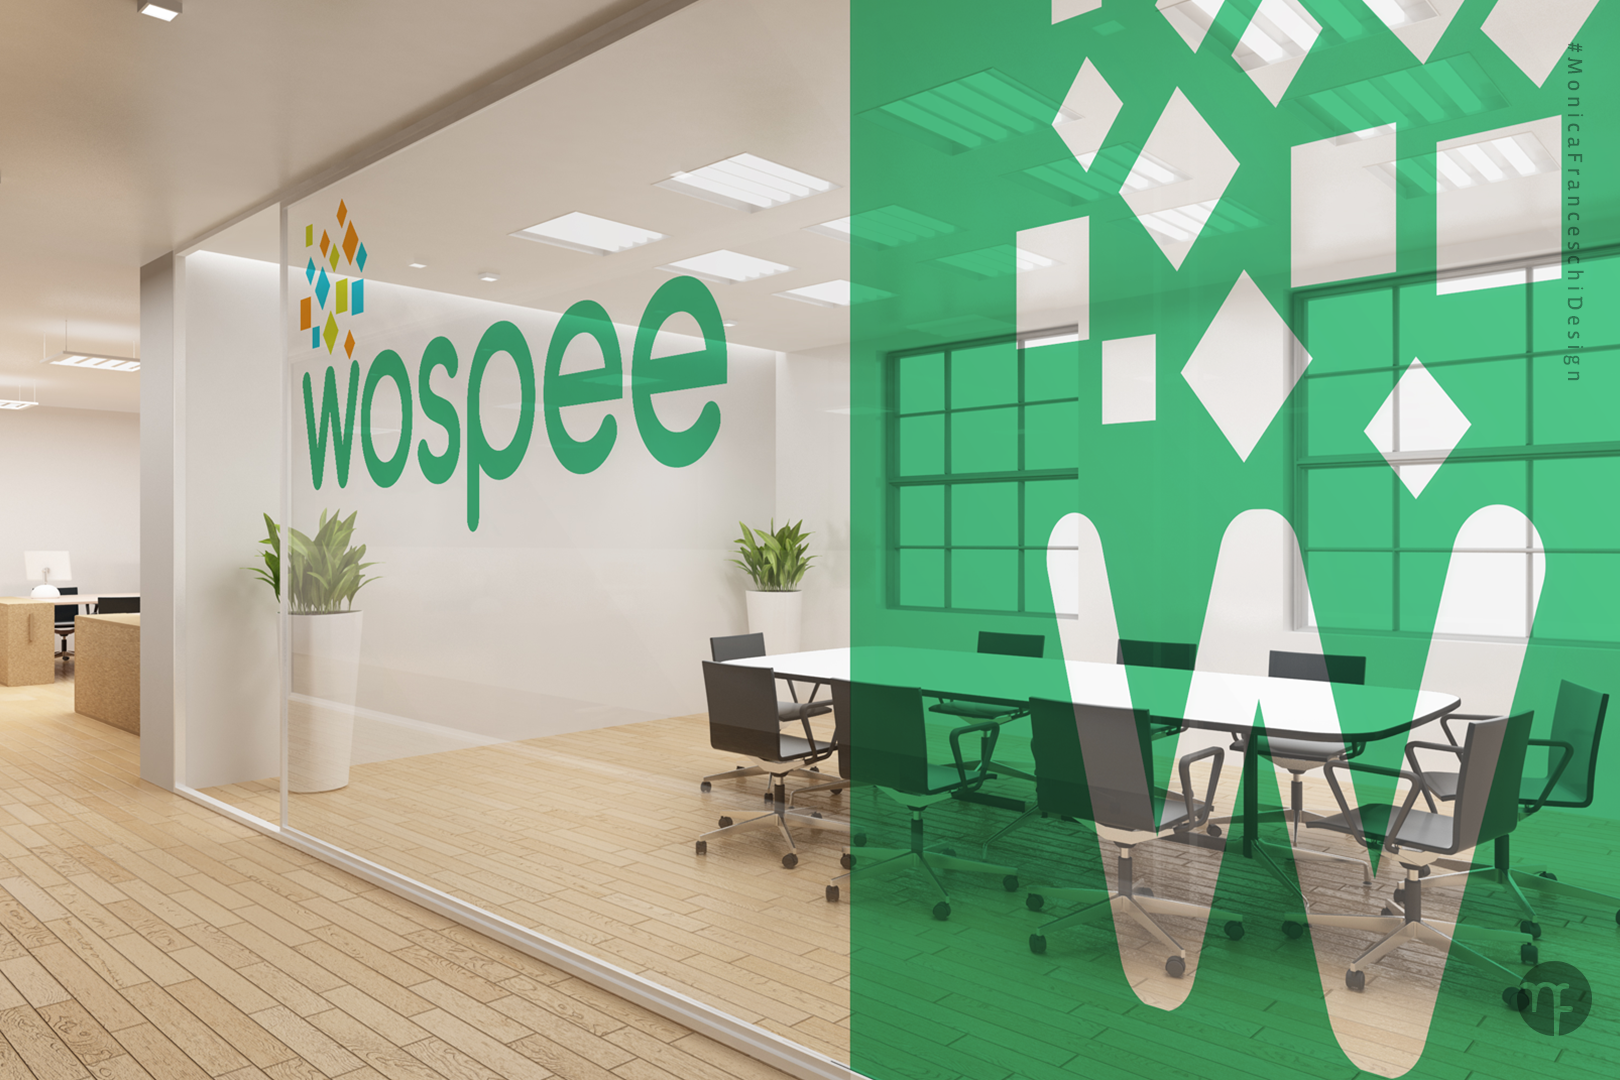 Branding and Web Design - Wospee